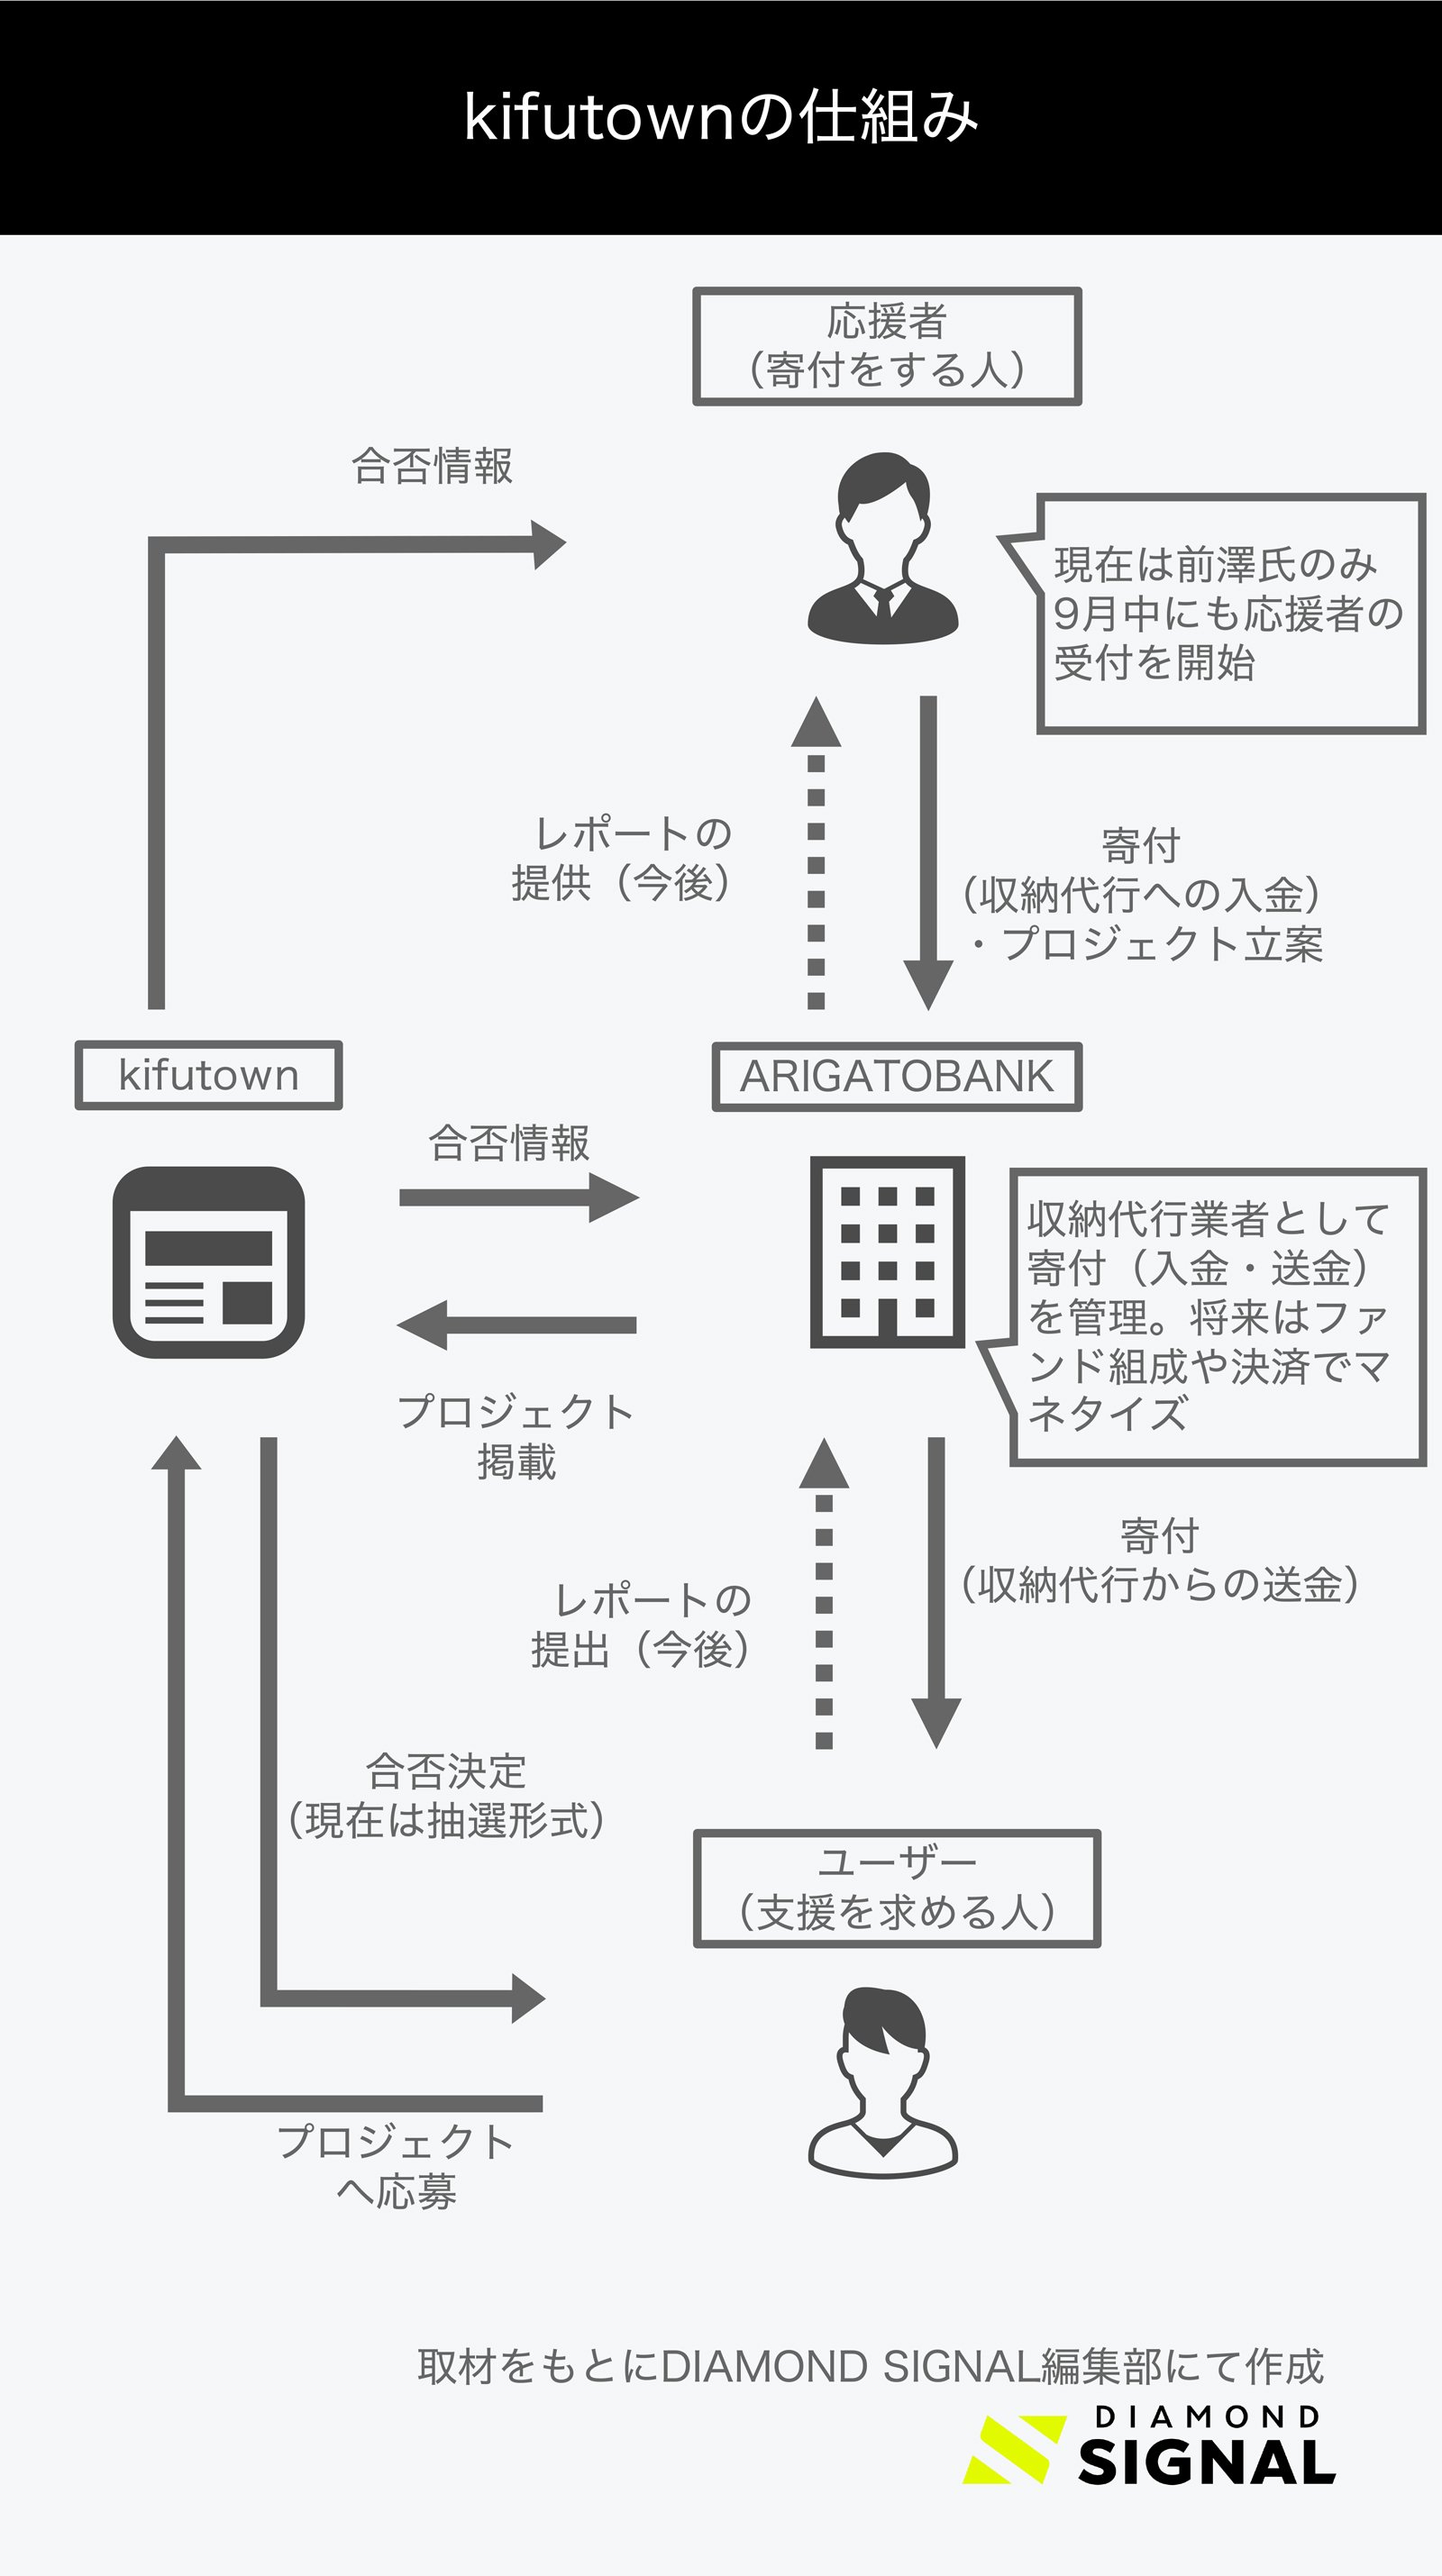 ZOZO創業者・前澤氏の“お金贈り”を事業化、「kifutown」はオンライン寄付で何を目指すのか